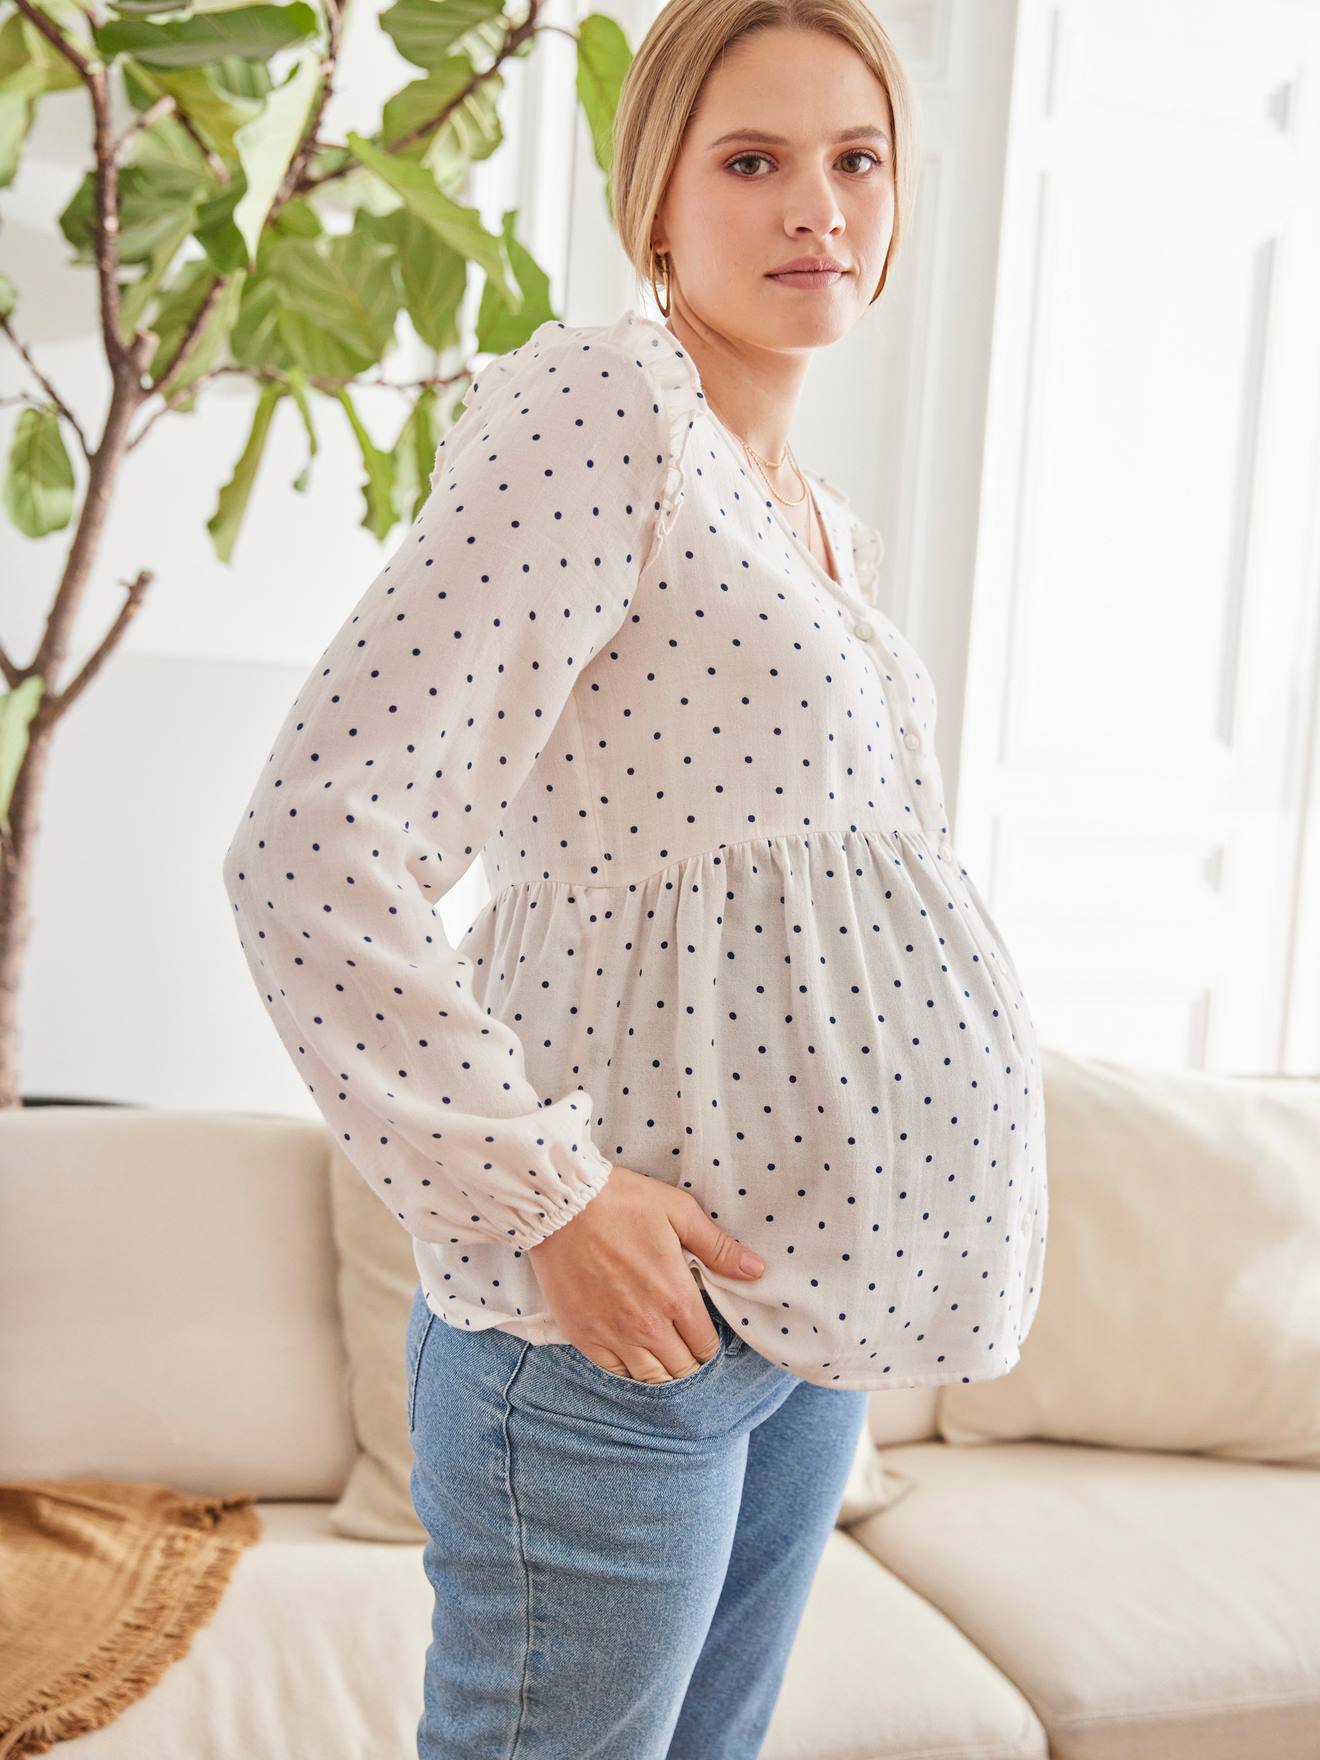 https://media.vertbaudet.com/Pictures/vertbaudet/258620/blouse-with-dot-print-maternity-nursing-special.jpg